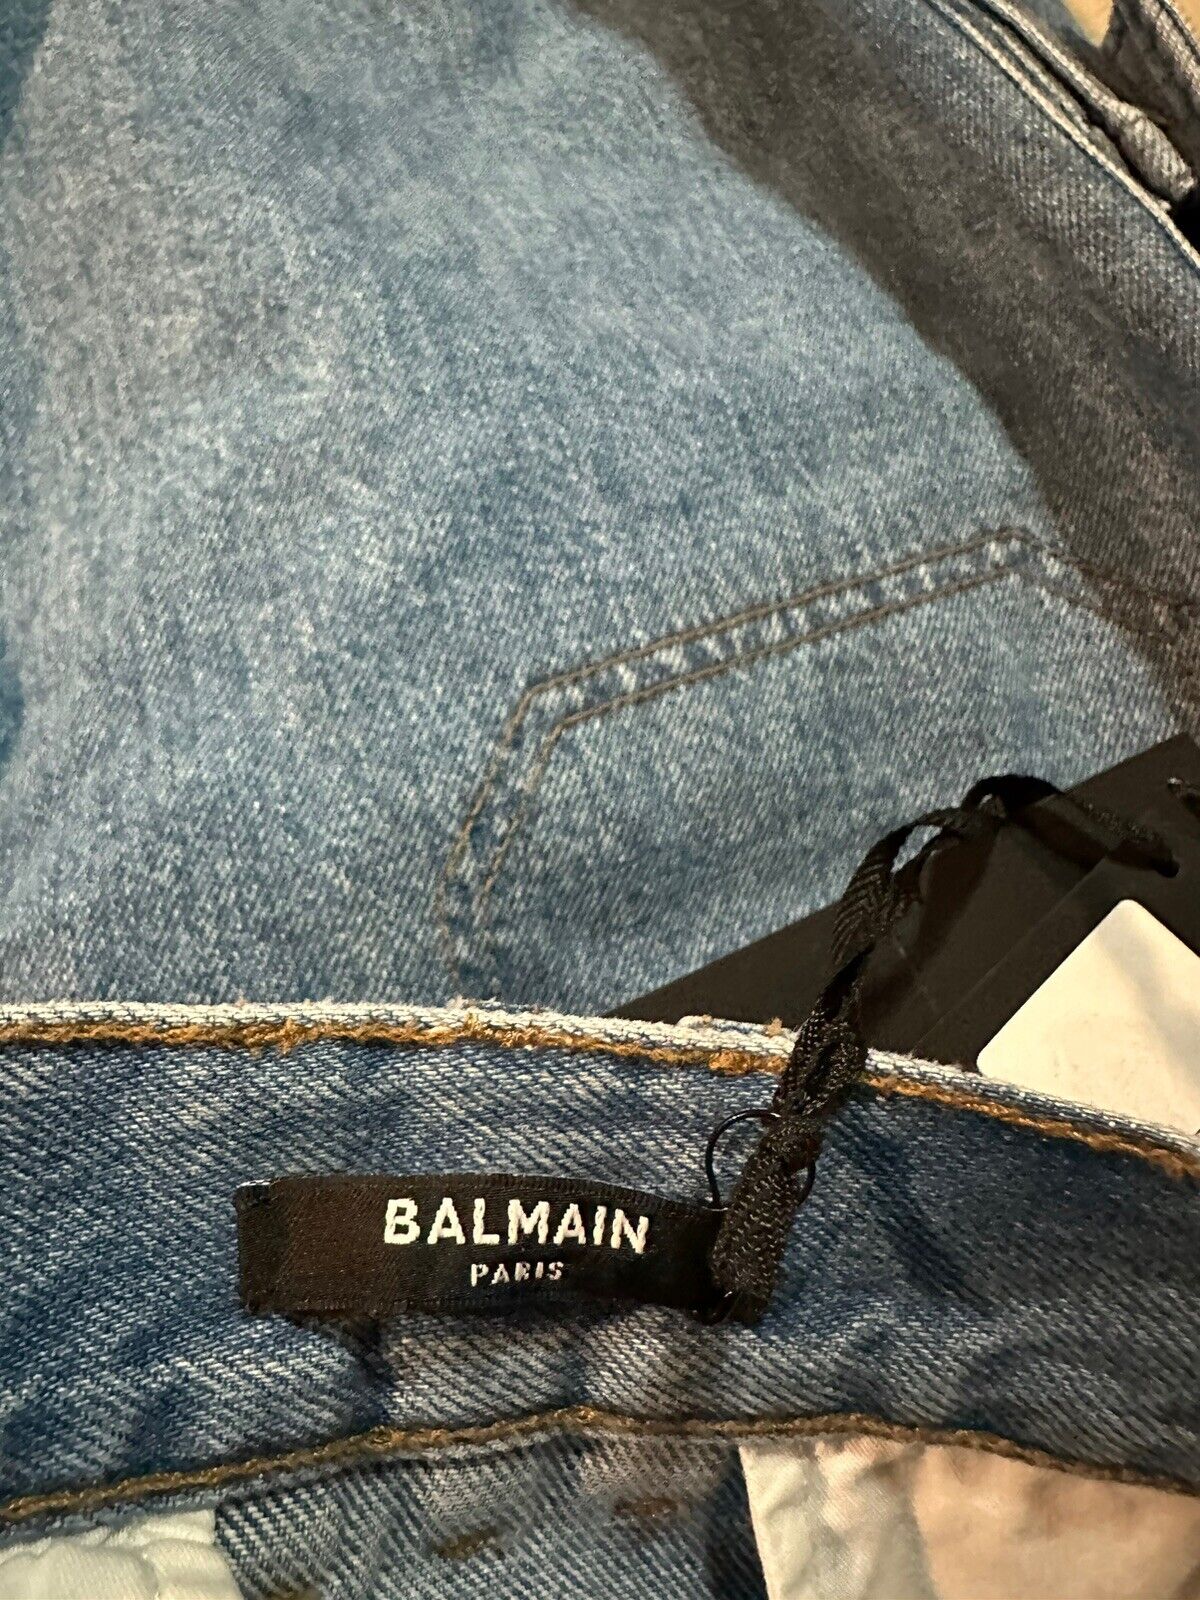 NWT $1395 Balmain Cargo Strapped Denim Shorts Pants Blue 34 US ( Measured 36 )